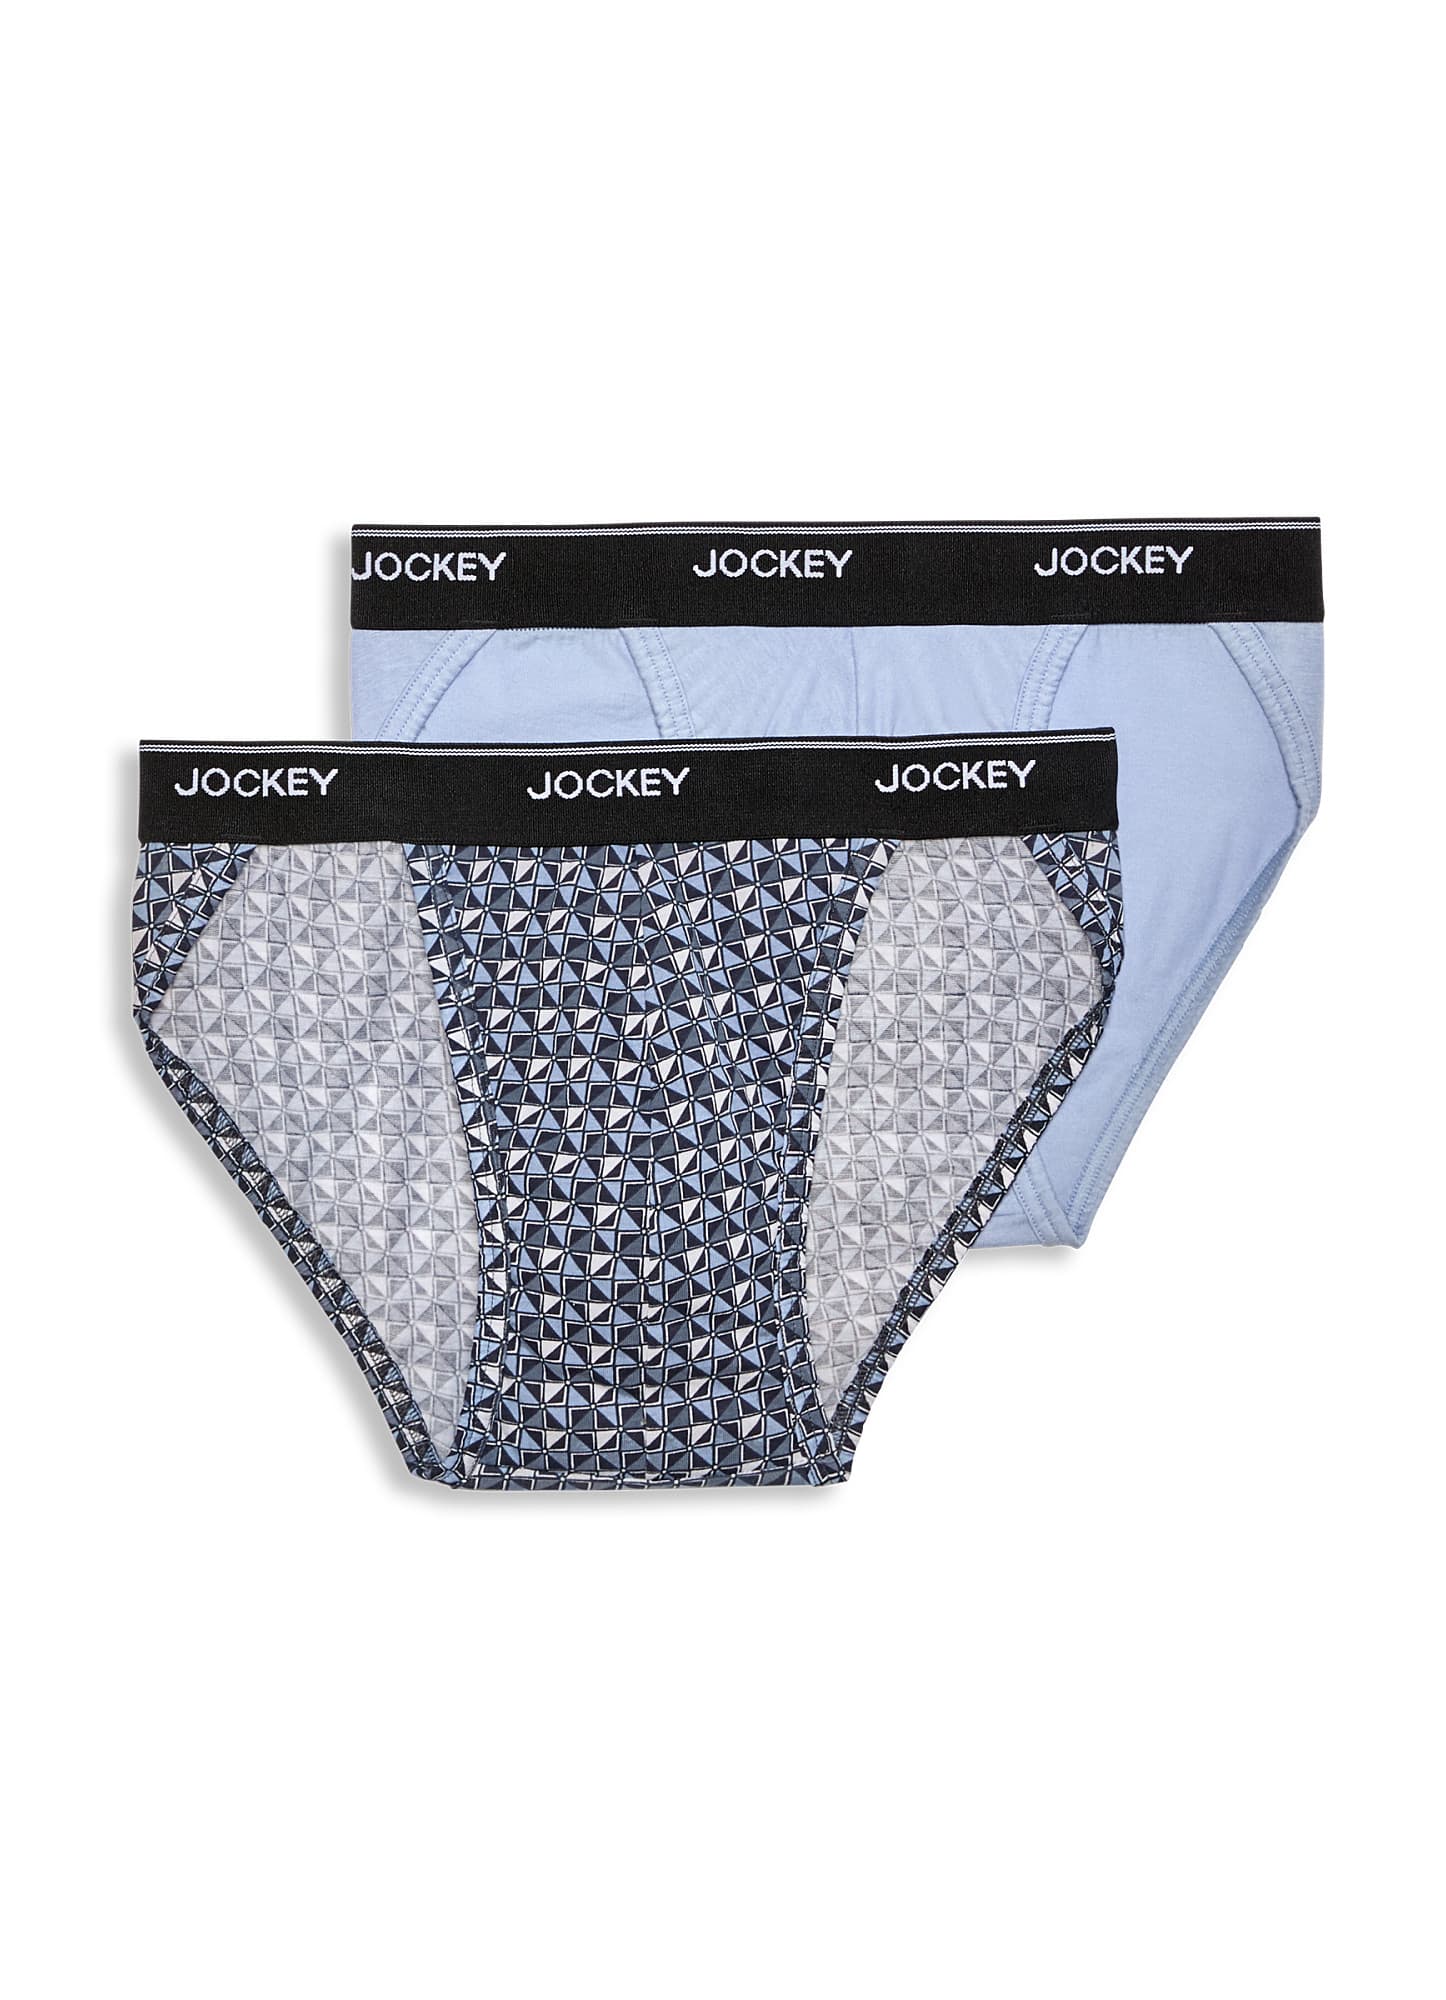 Jockey Elance Mens XL 40-42 String Bikini White 100 Cotton Style